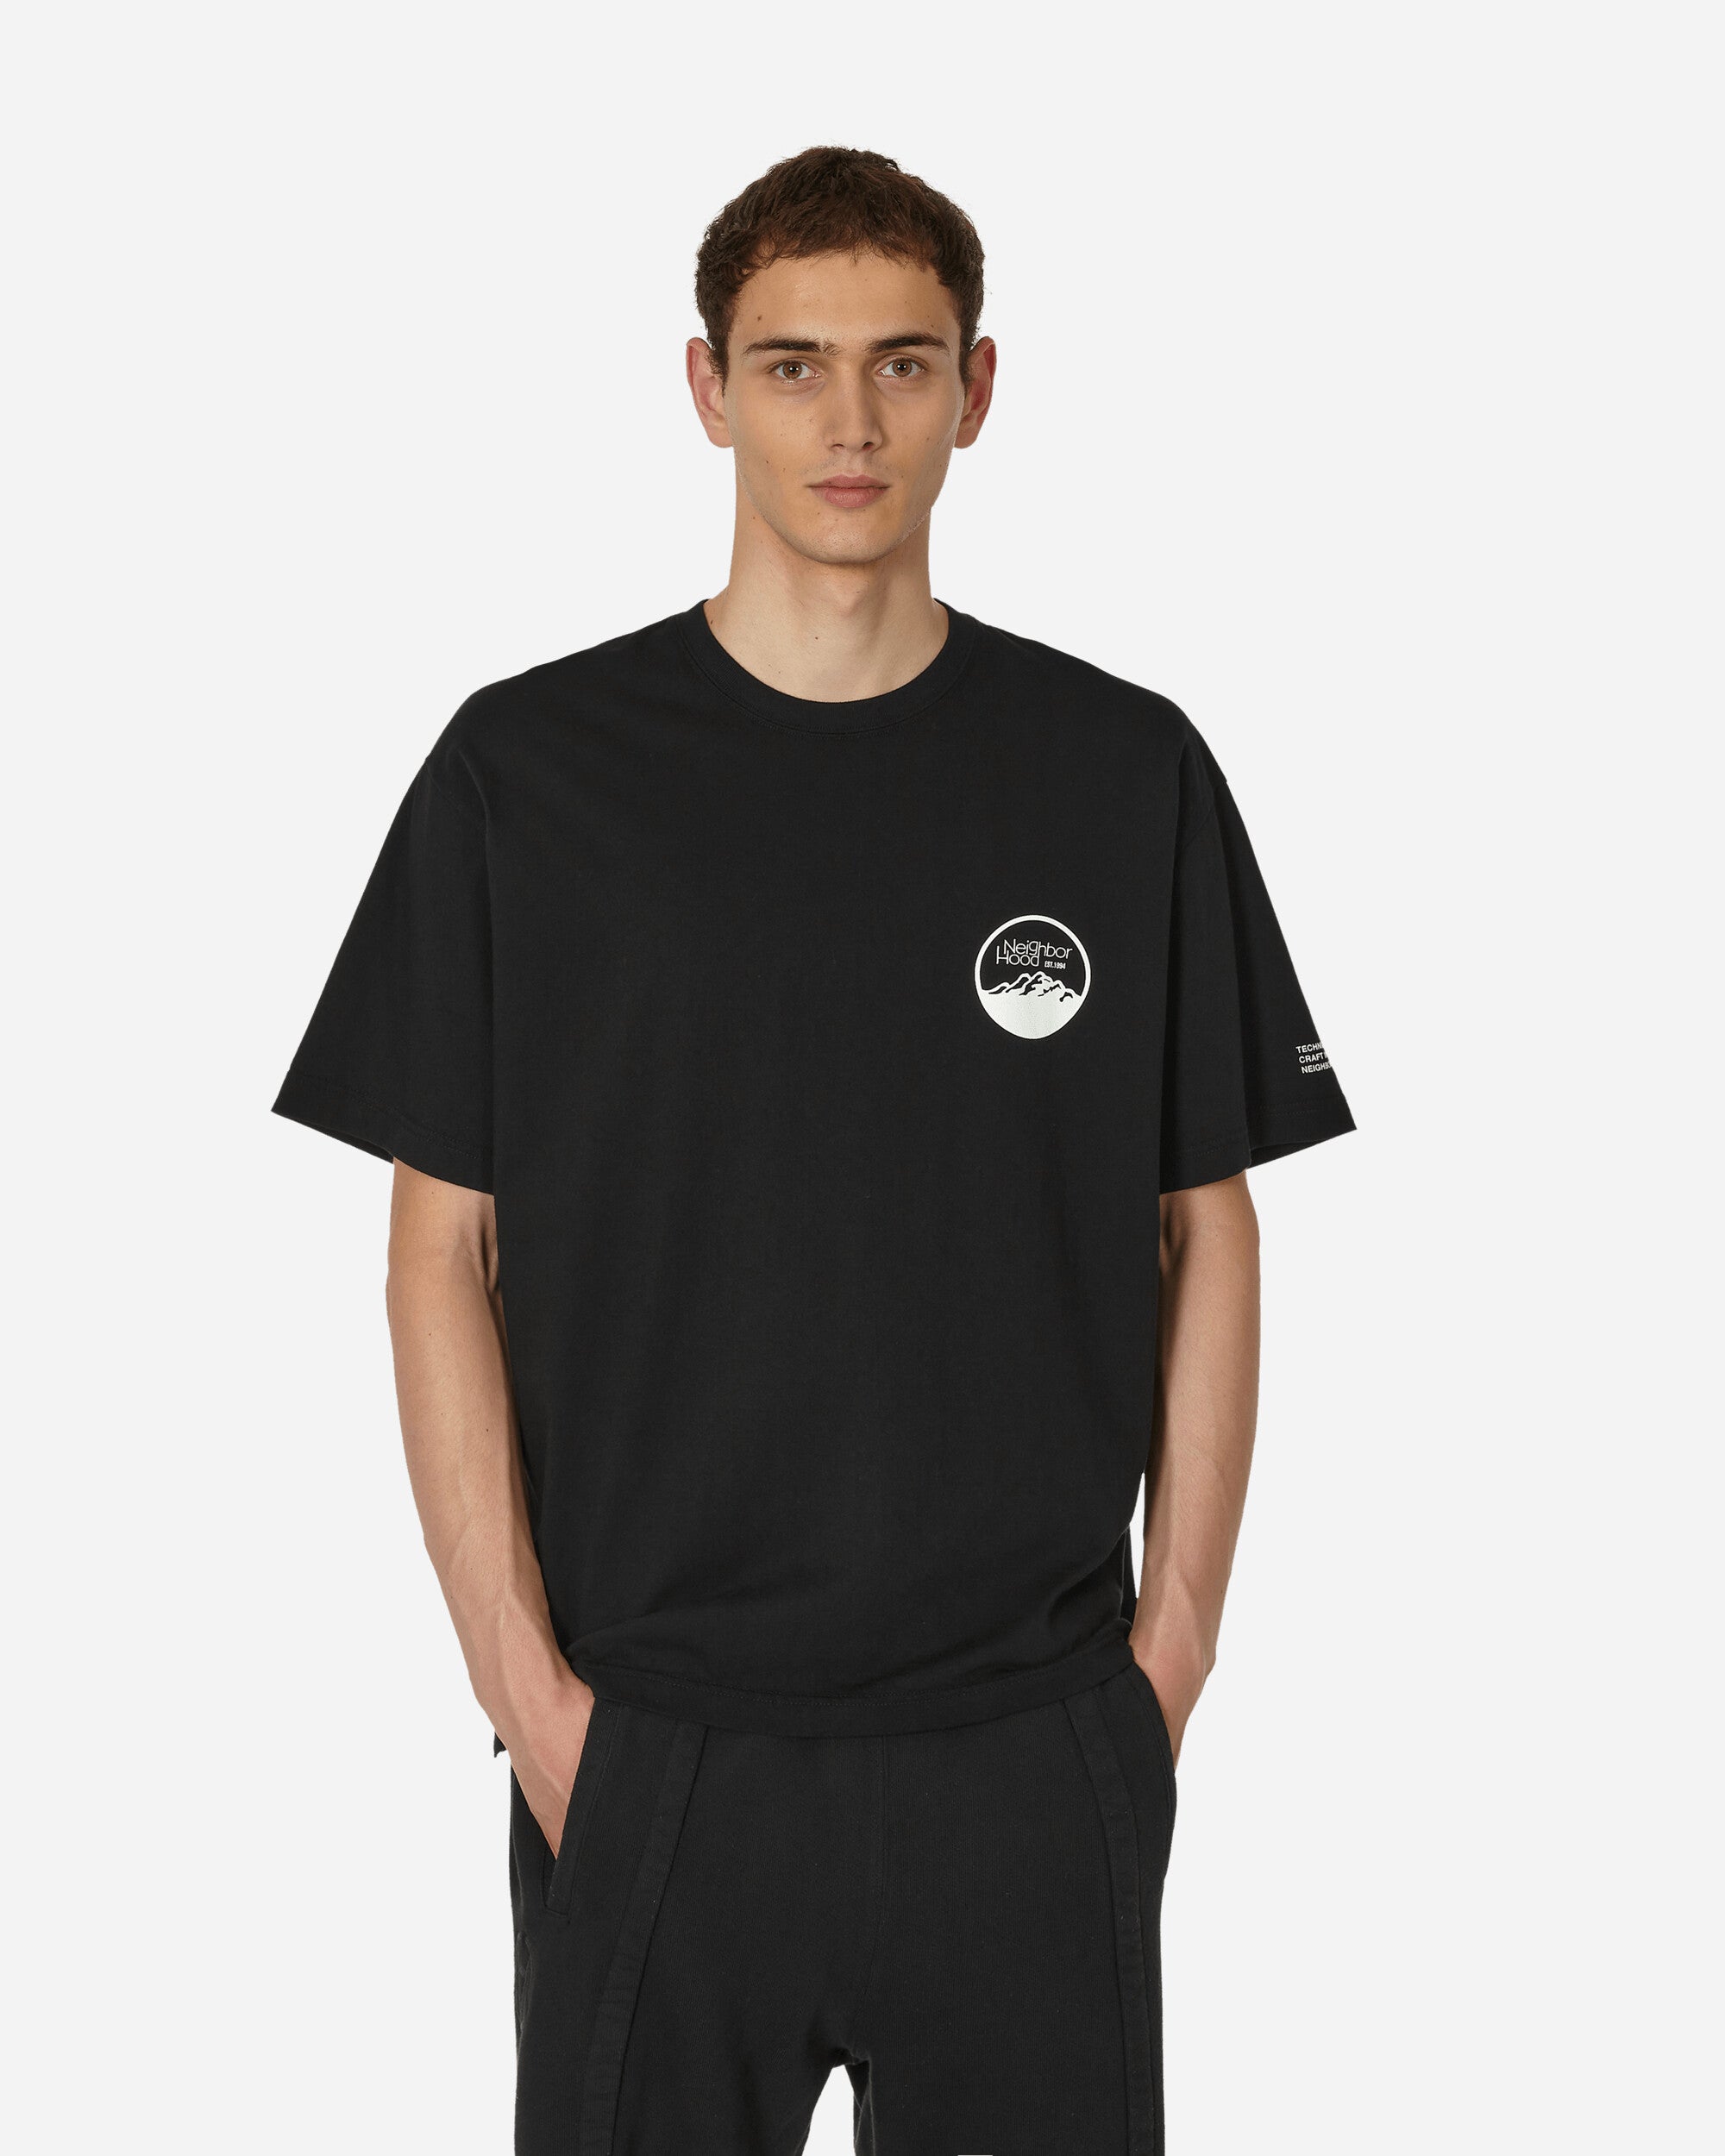 Neighborhood SS-5 T-Shirt Black - Slam Jam® Official Store